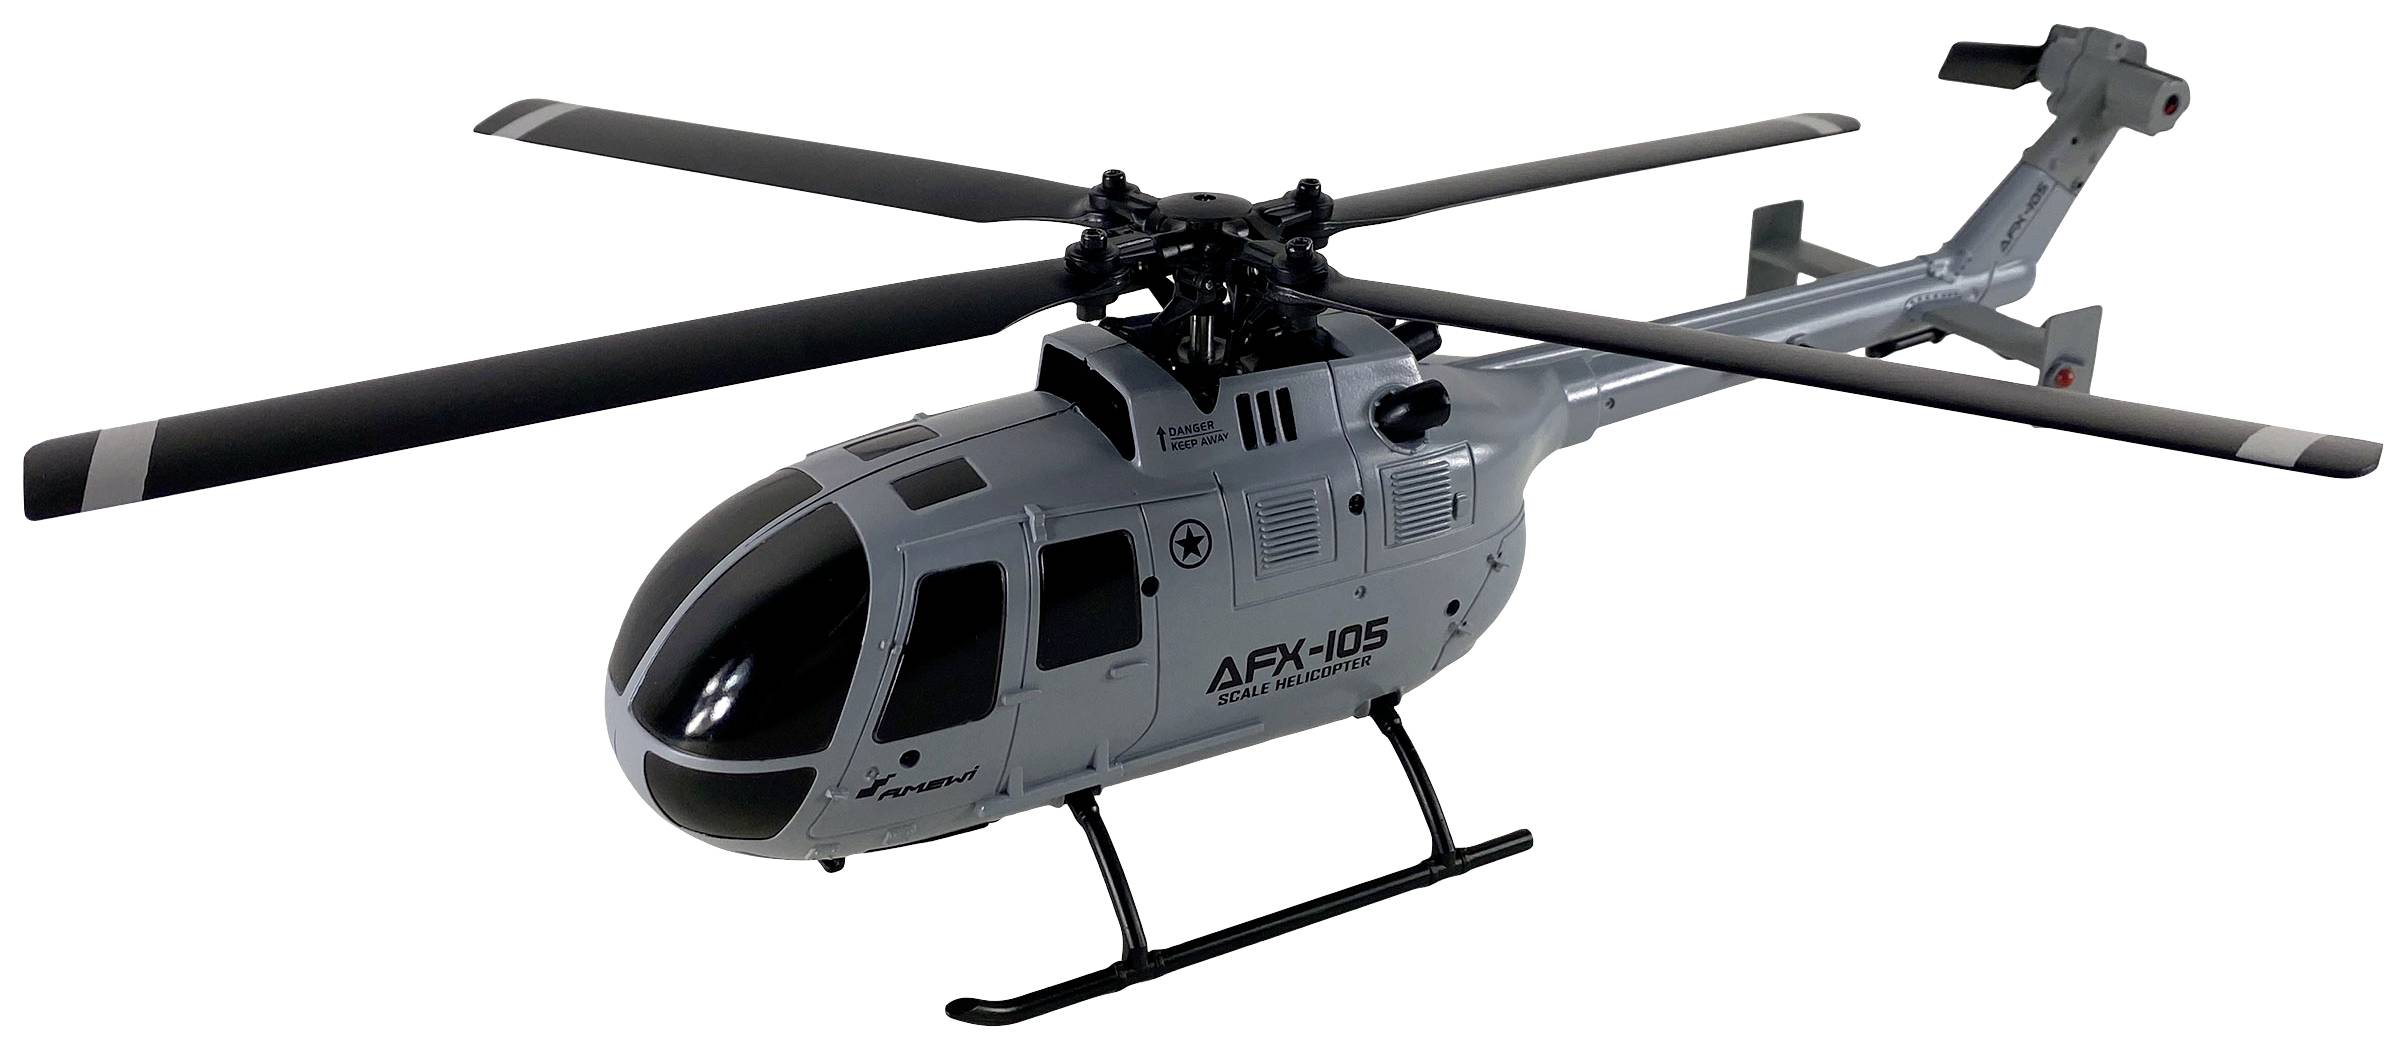 Amewi AFX-105 RC helikopter voor beginners RTF kopen Electronic